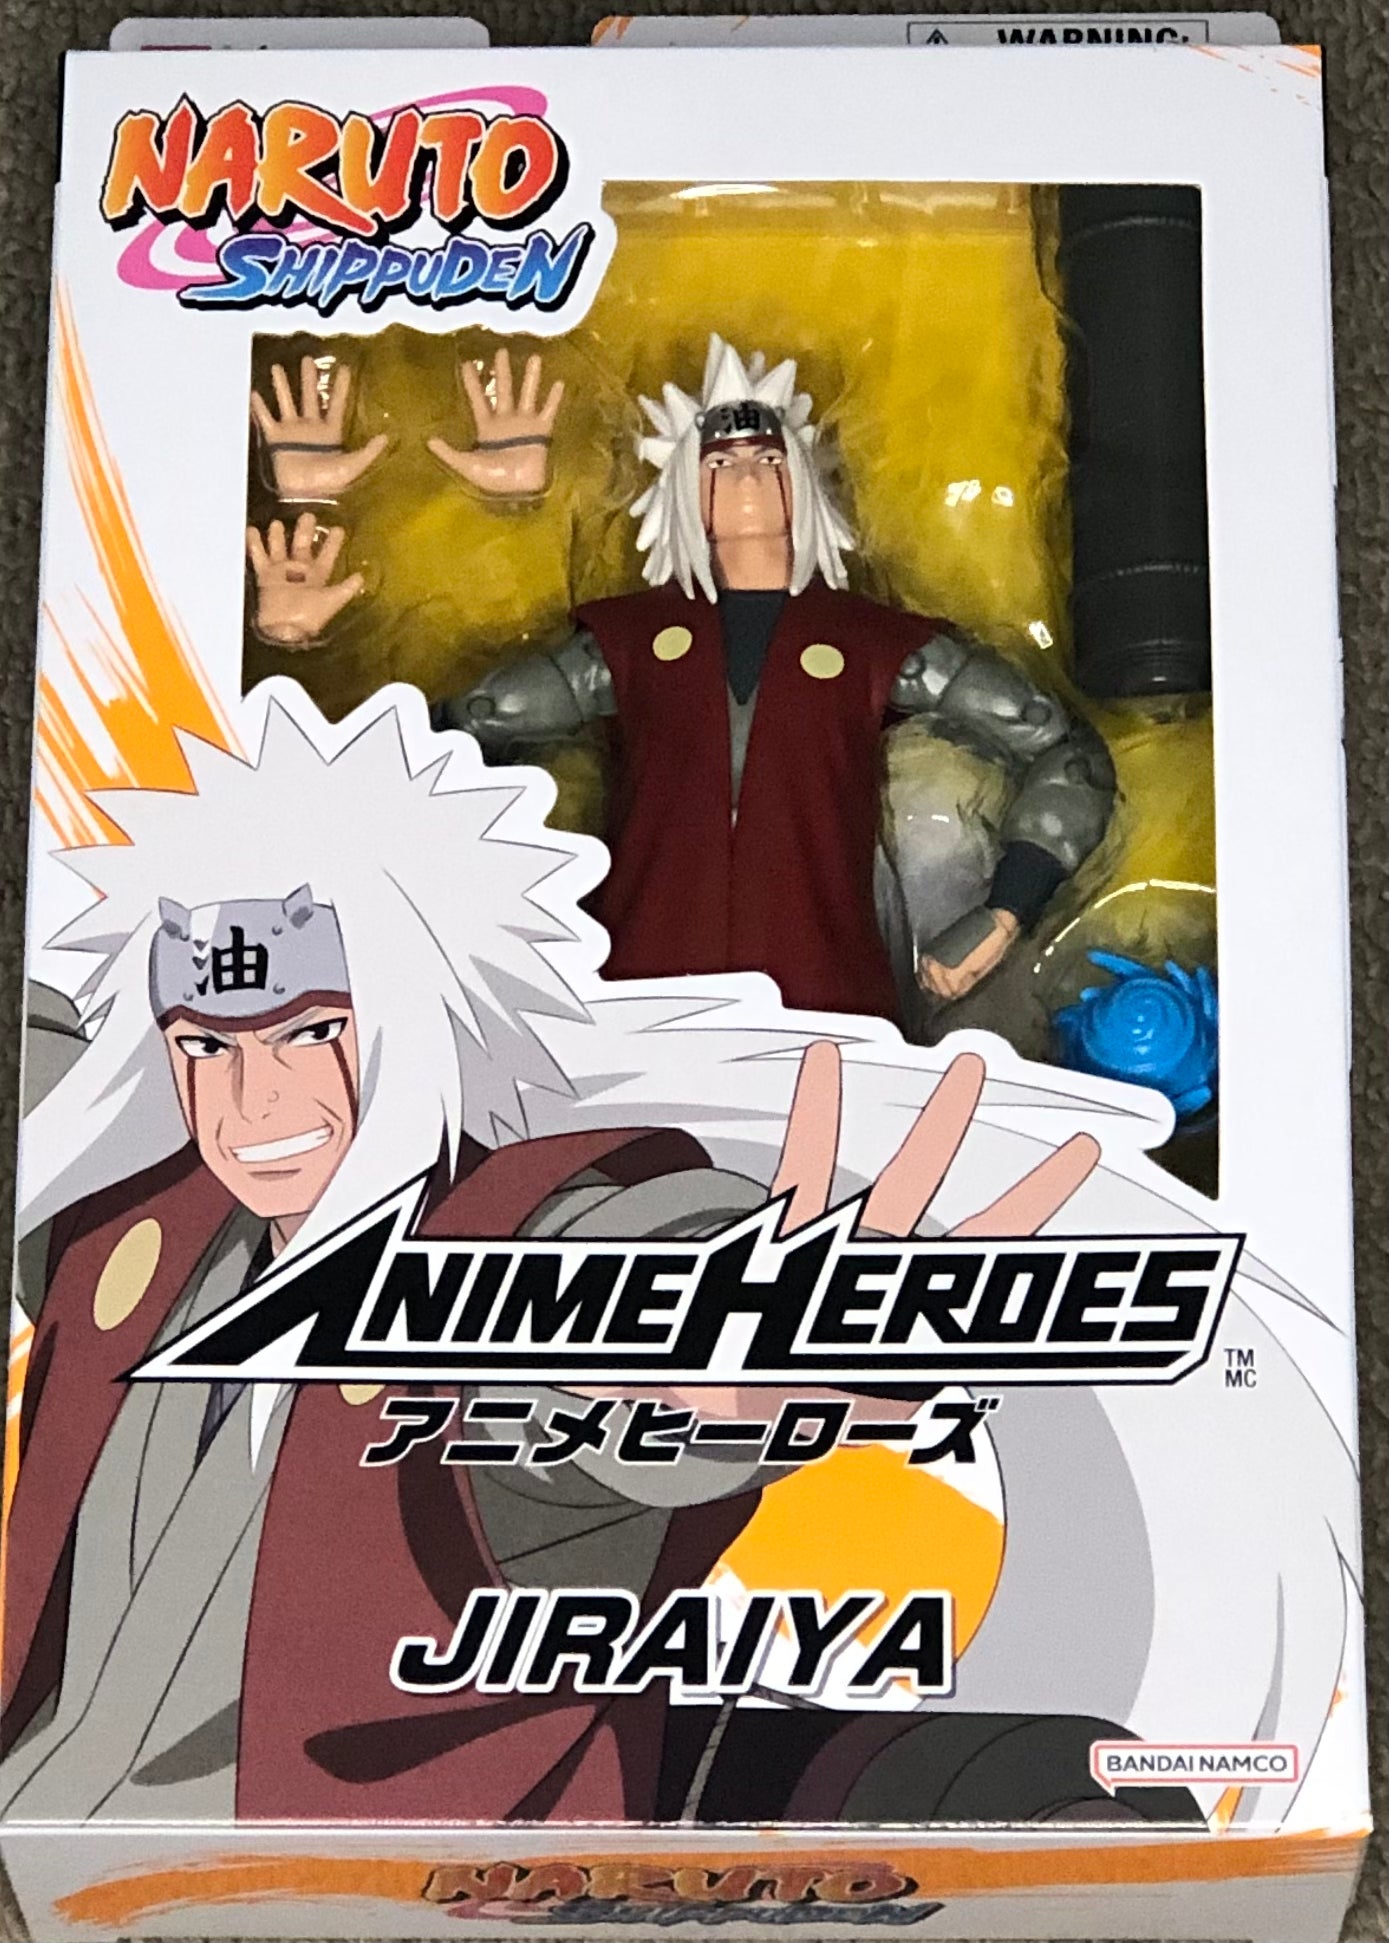 Naruto: Shippuden Anime Heroes Jiraiya Action Figure – Toyz Anime